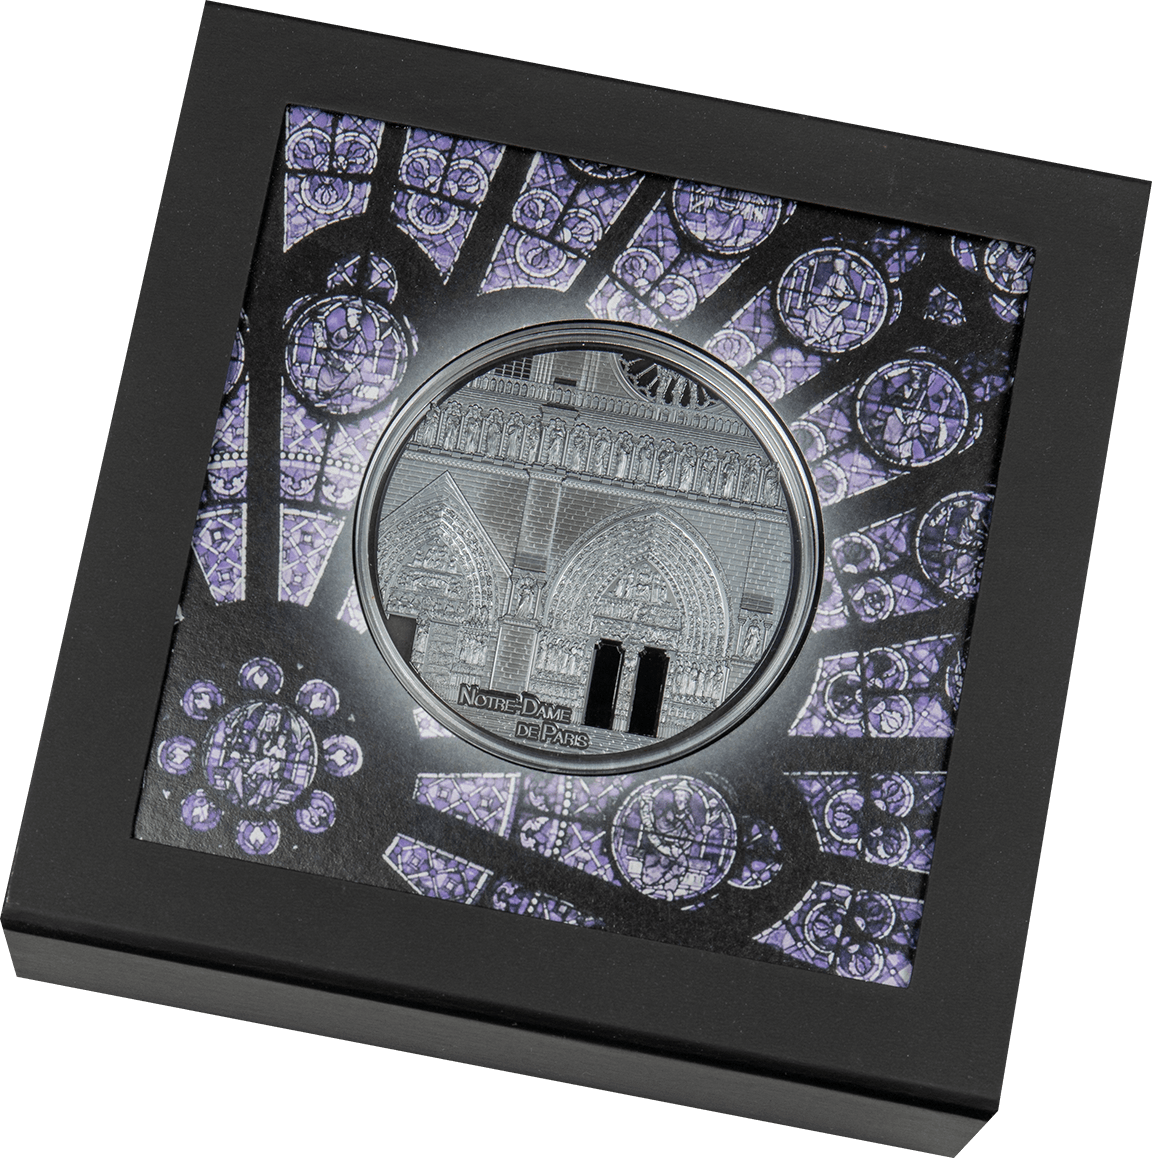 NOTRE DAME DE PARIS Tiffany Art 5 Oz Silver Coin $25 Palau 2021 - PARTHAVA COIN